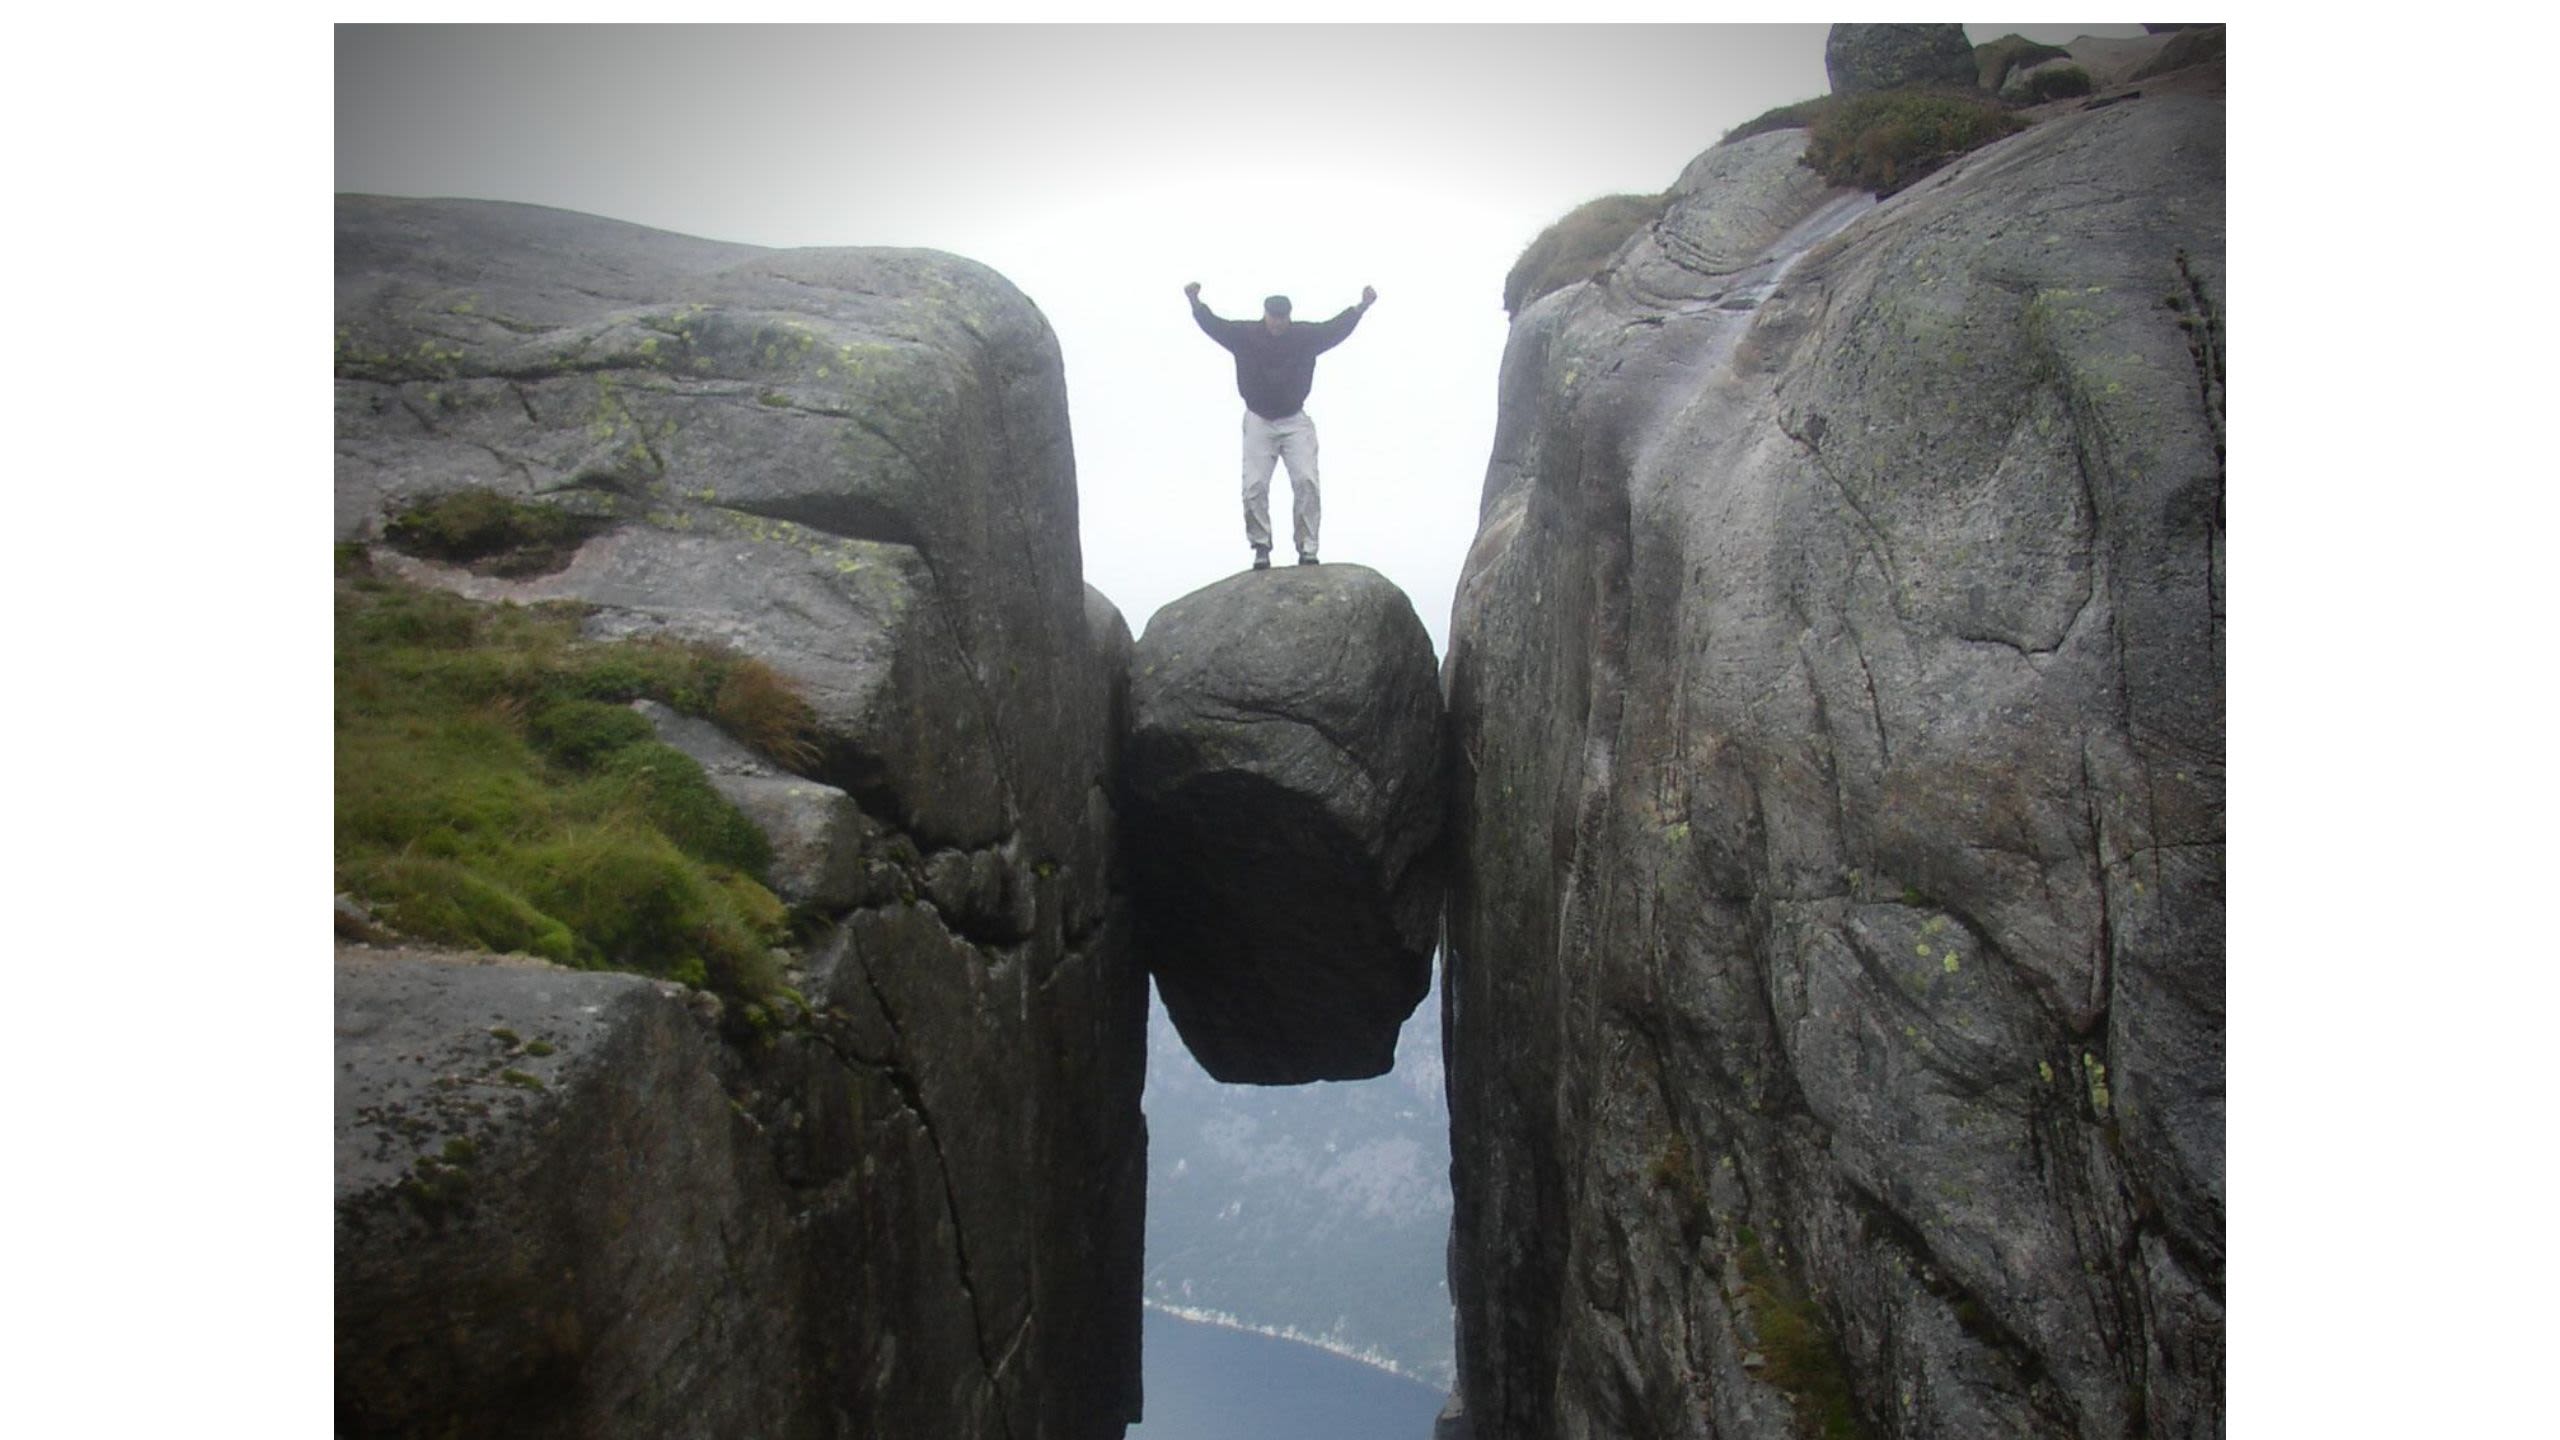 Professor Thomsen posing on Kjeragbolten, a boulder on the mountain Kjerag in Norway in 2004.